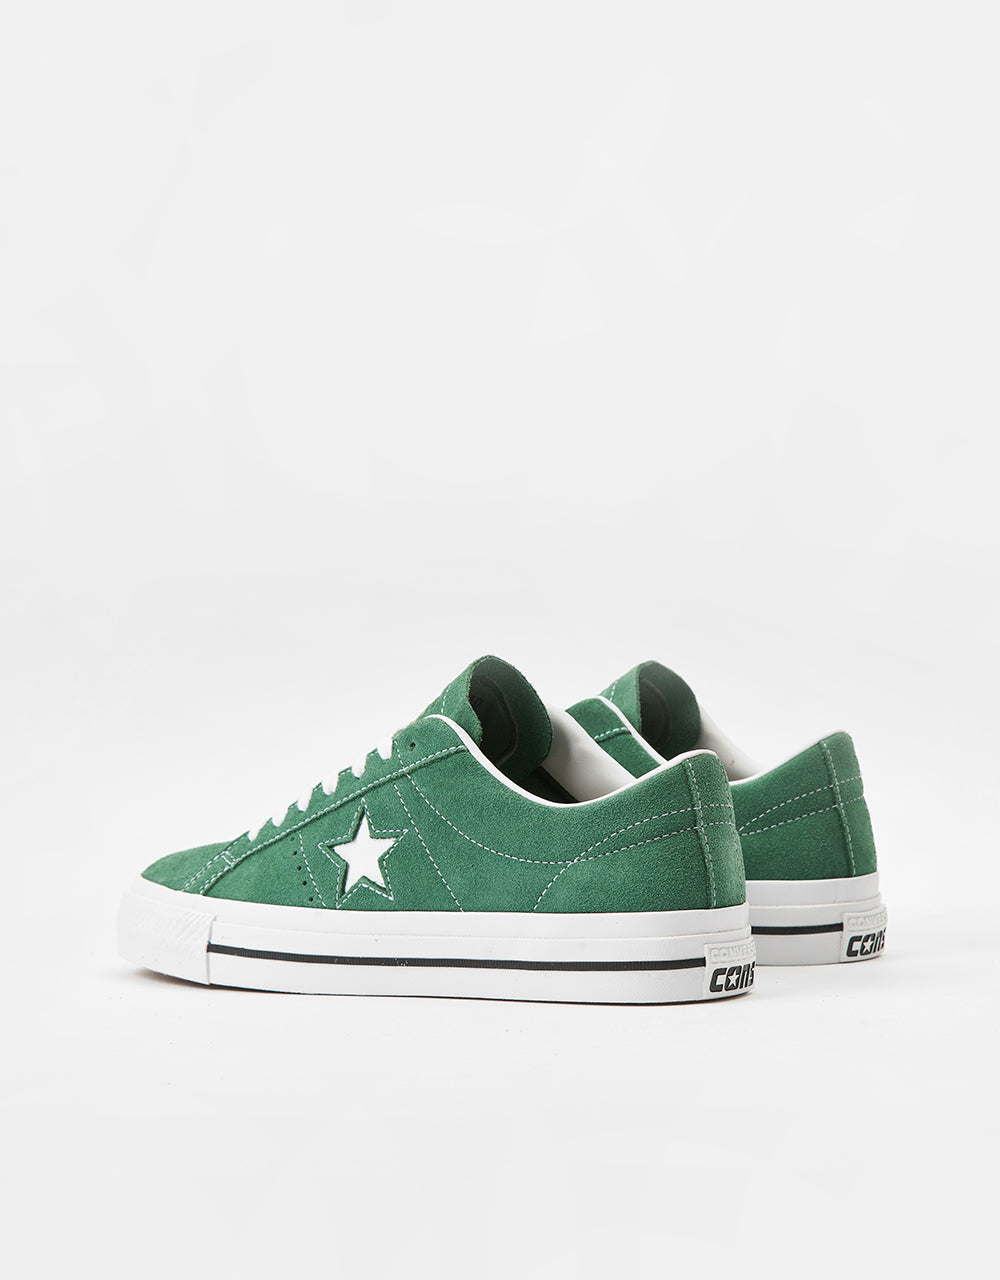 Converse One Star Pro Skate Shoes - Admiral Elm/White/Blacks